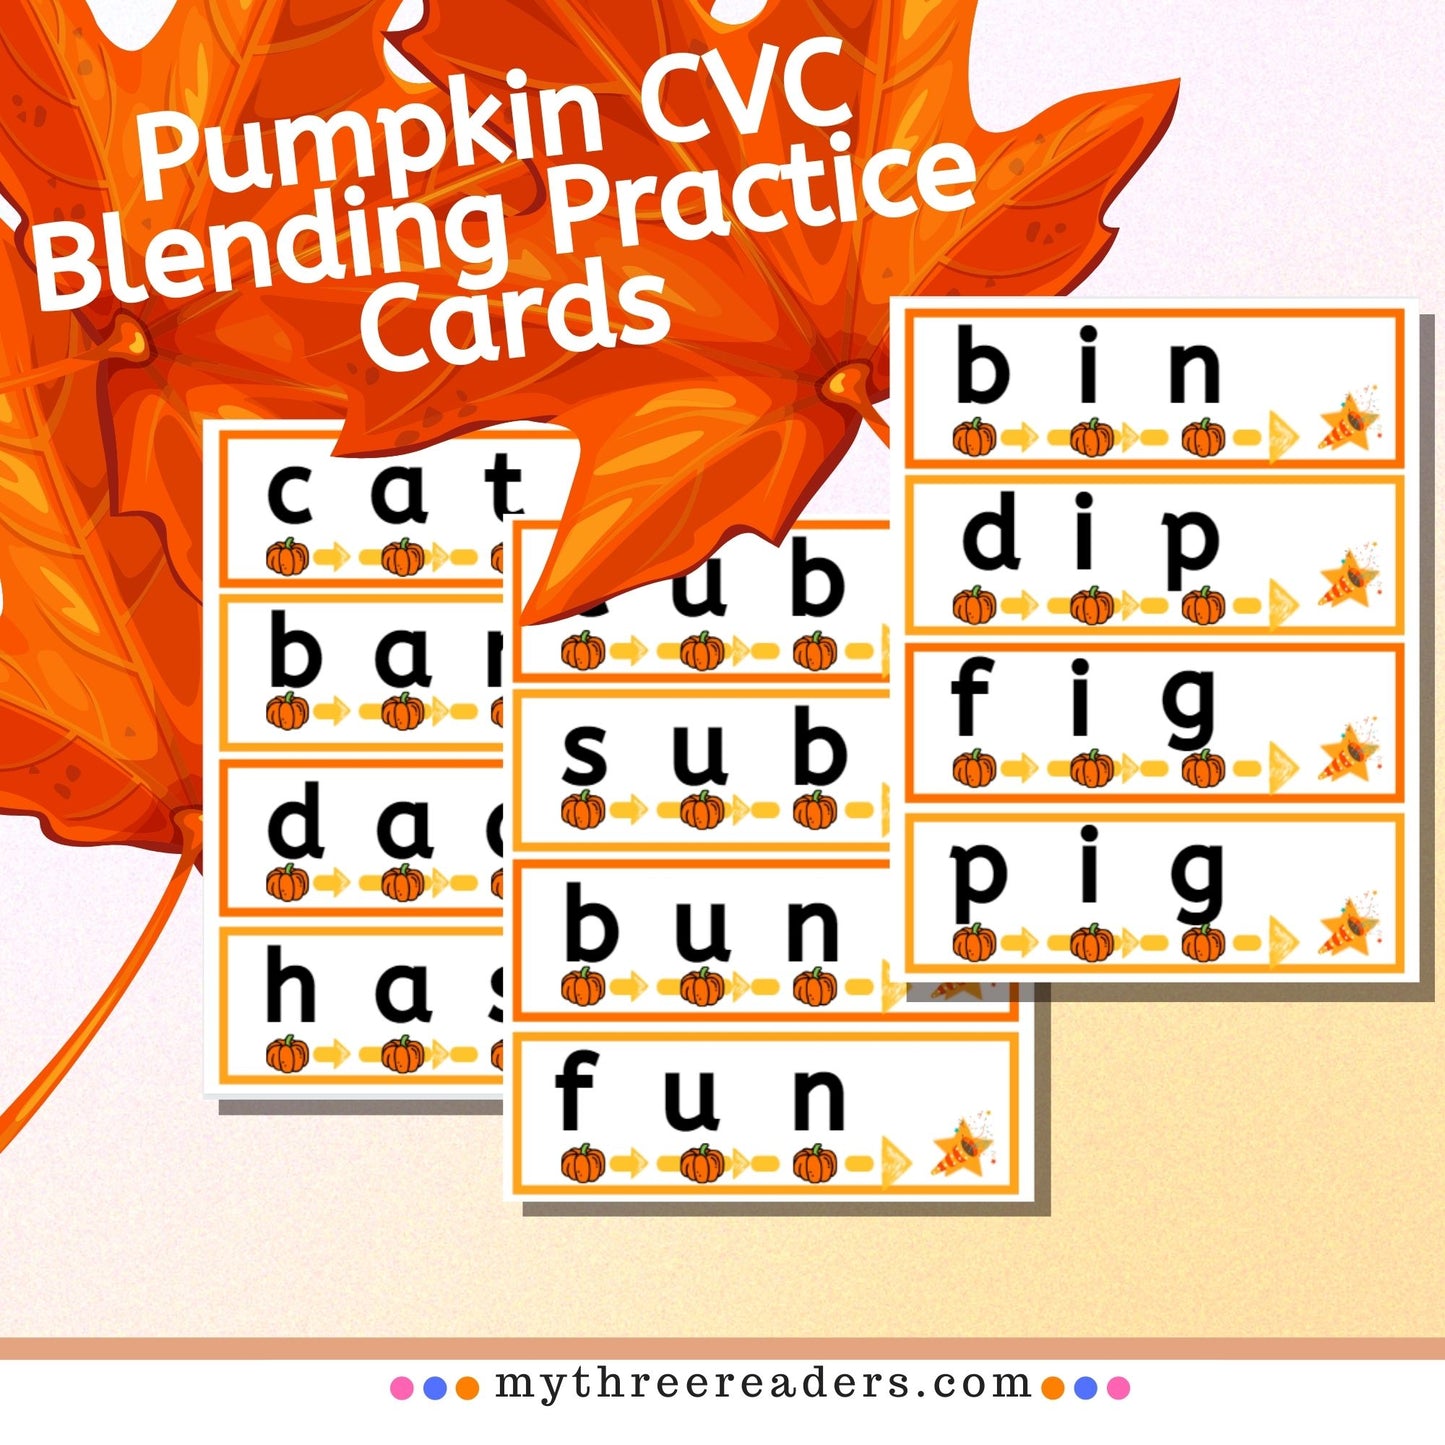 Printable Pumpkin CVC Blending Cards